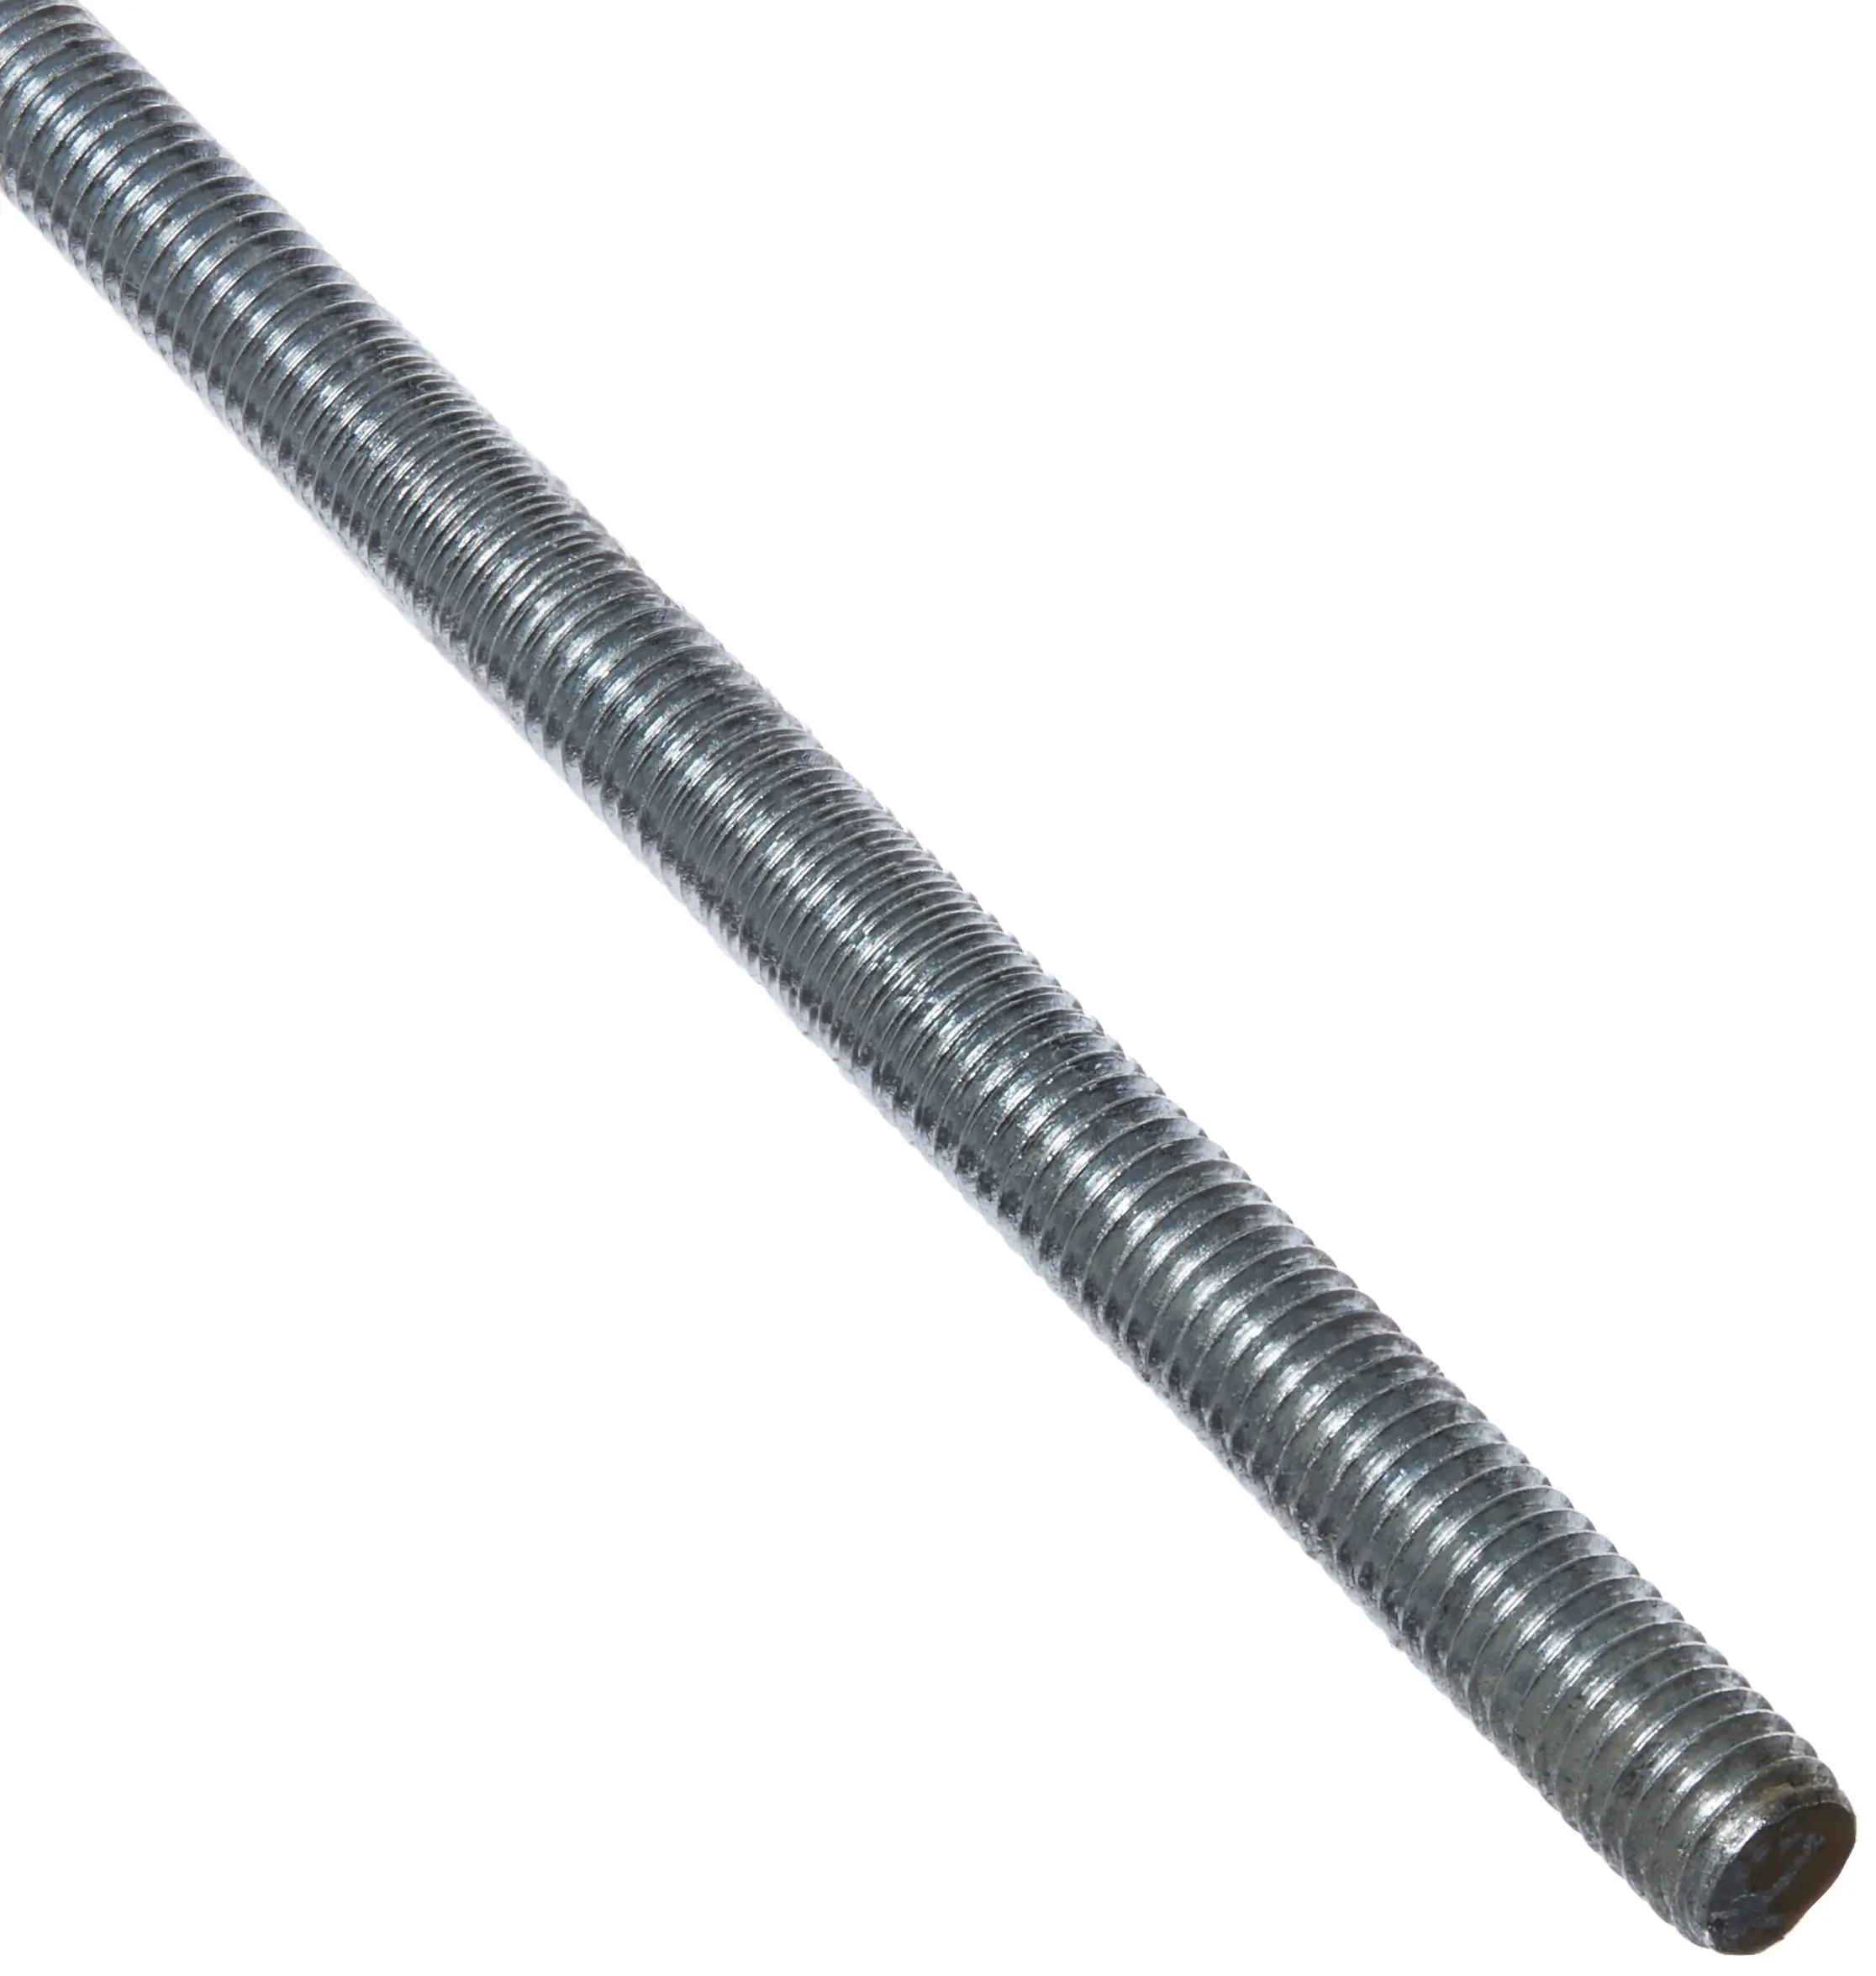 Right Hand Threads 9//16-18 Thread Size Steel Fully Threaded Rod 72 Length